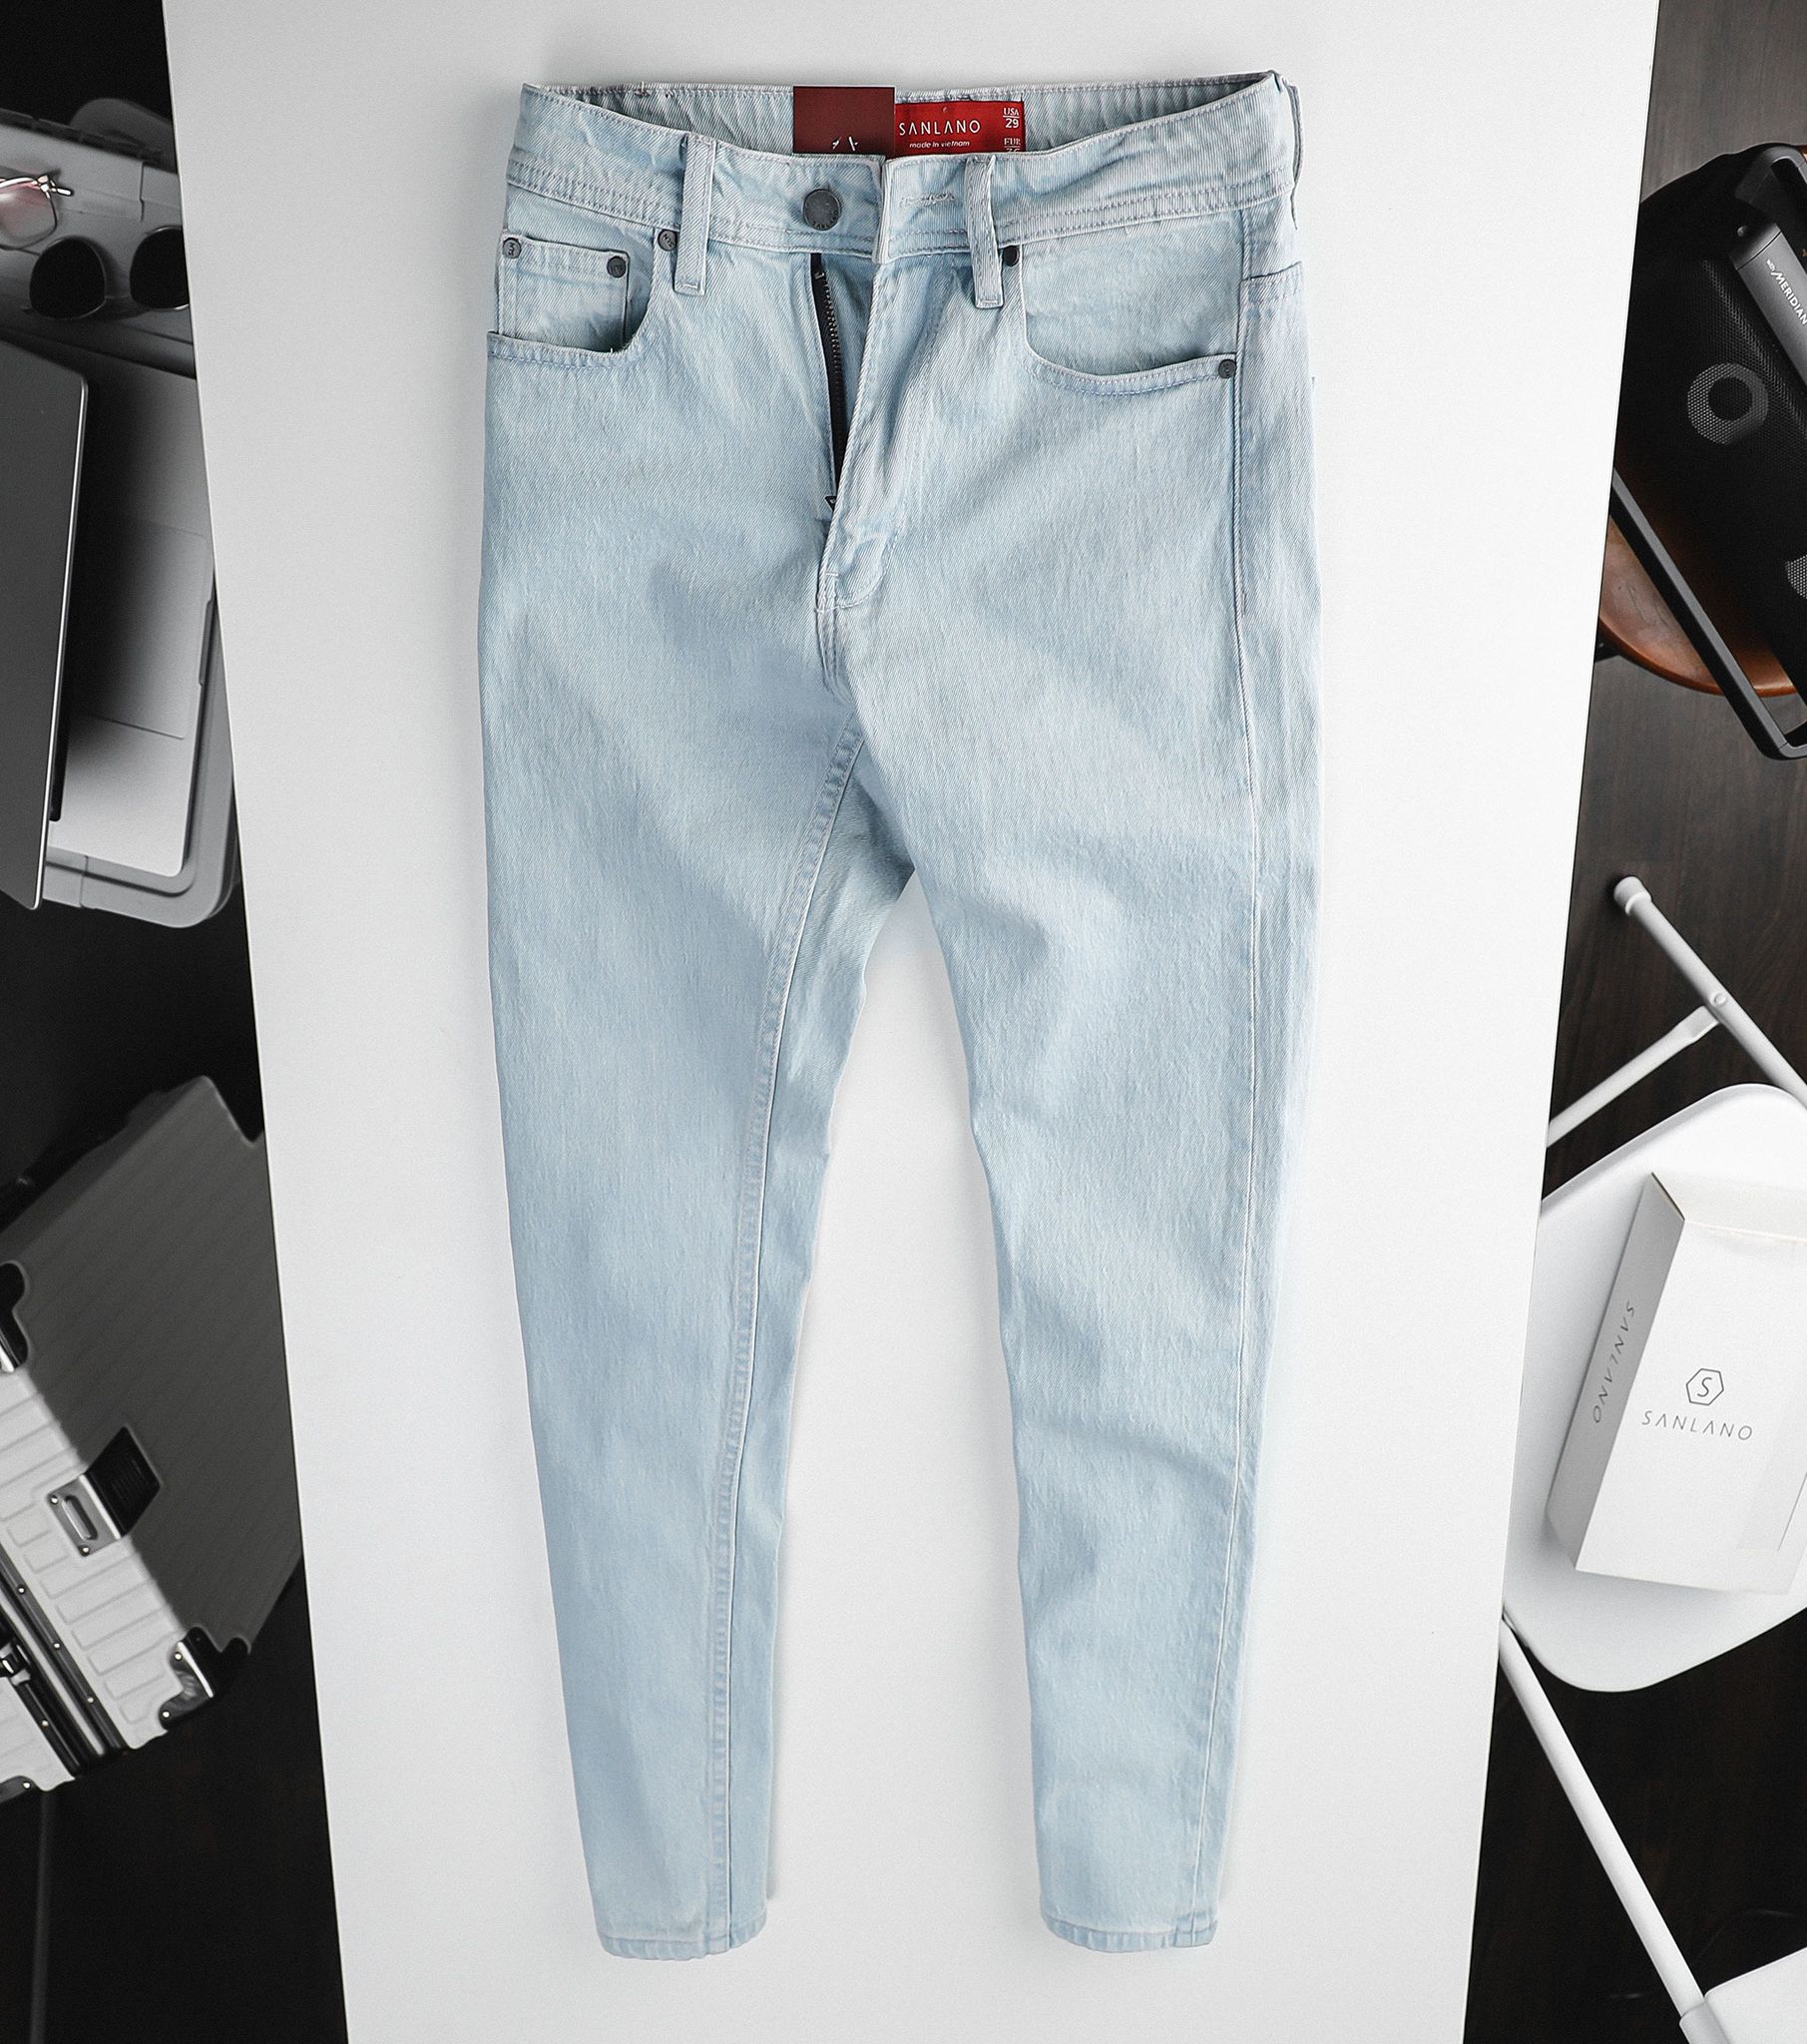  Jeans SANLANO Xanh trắng 